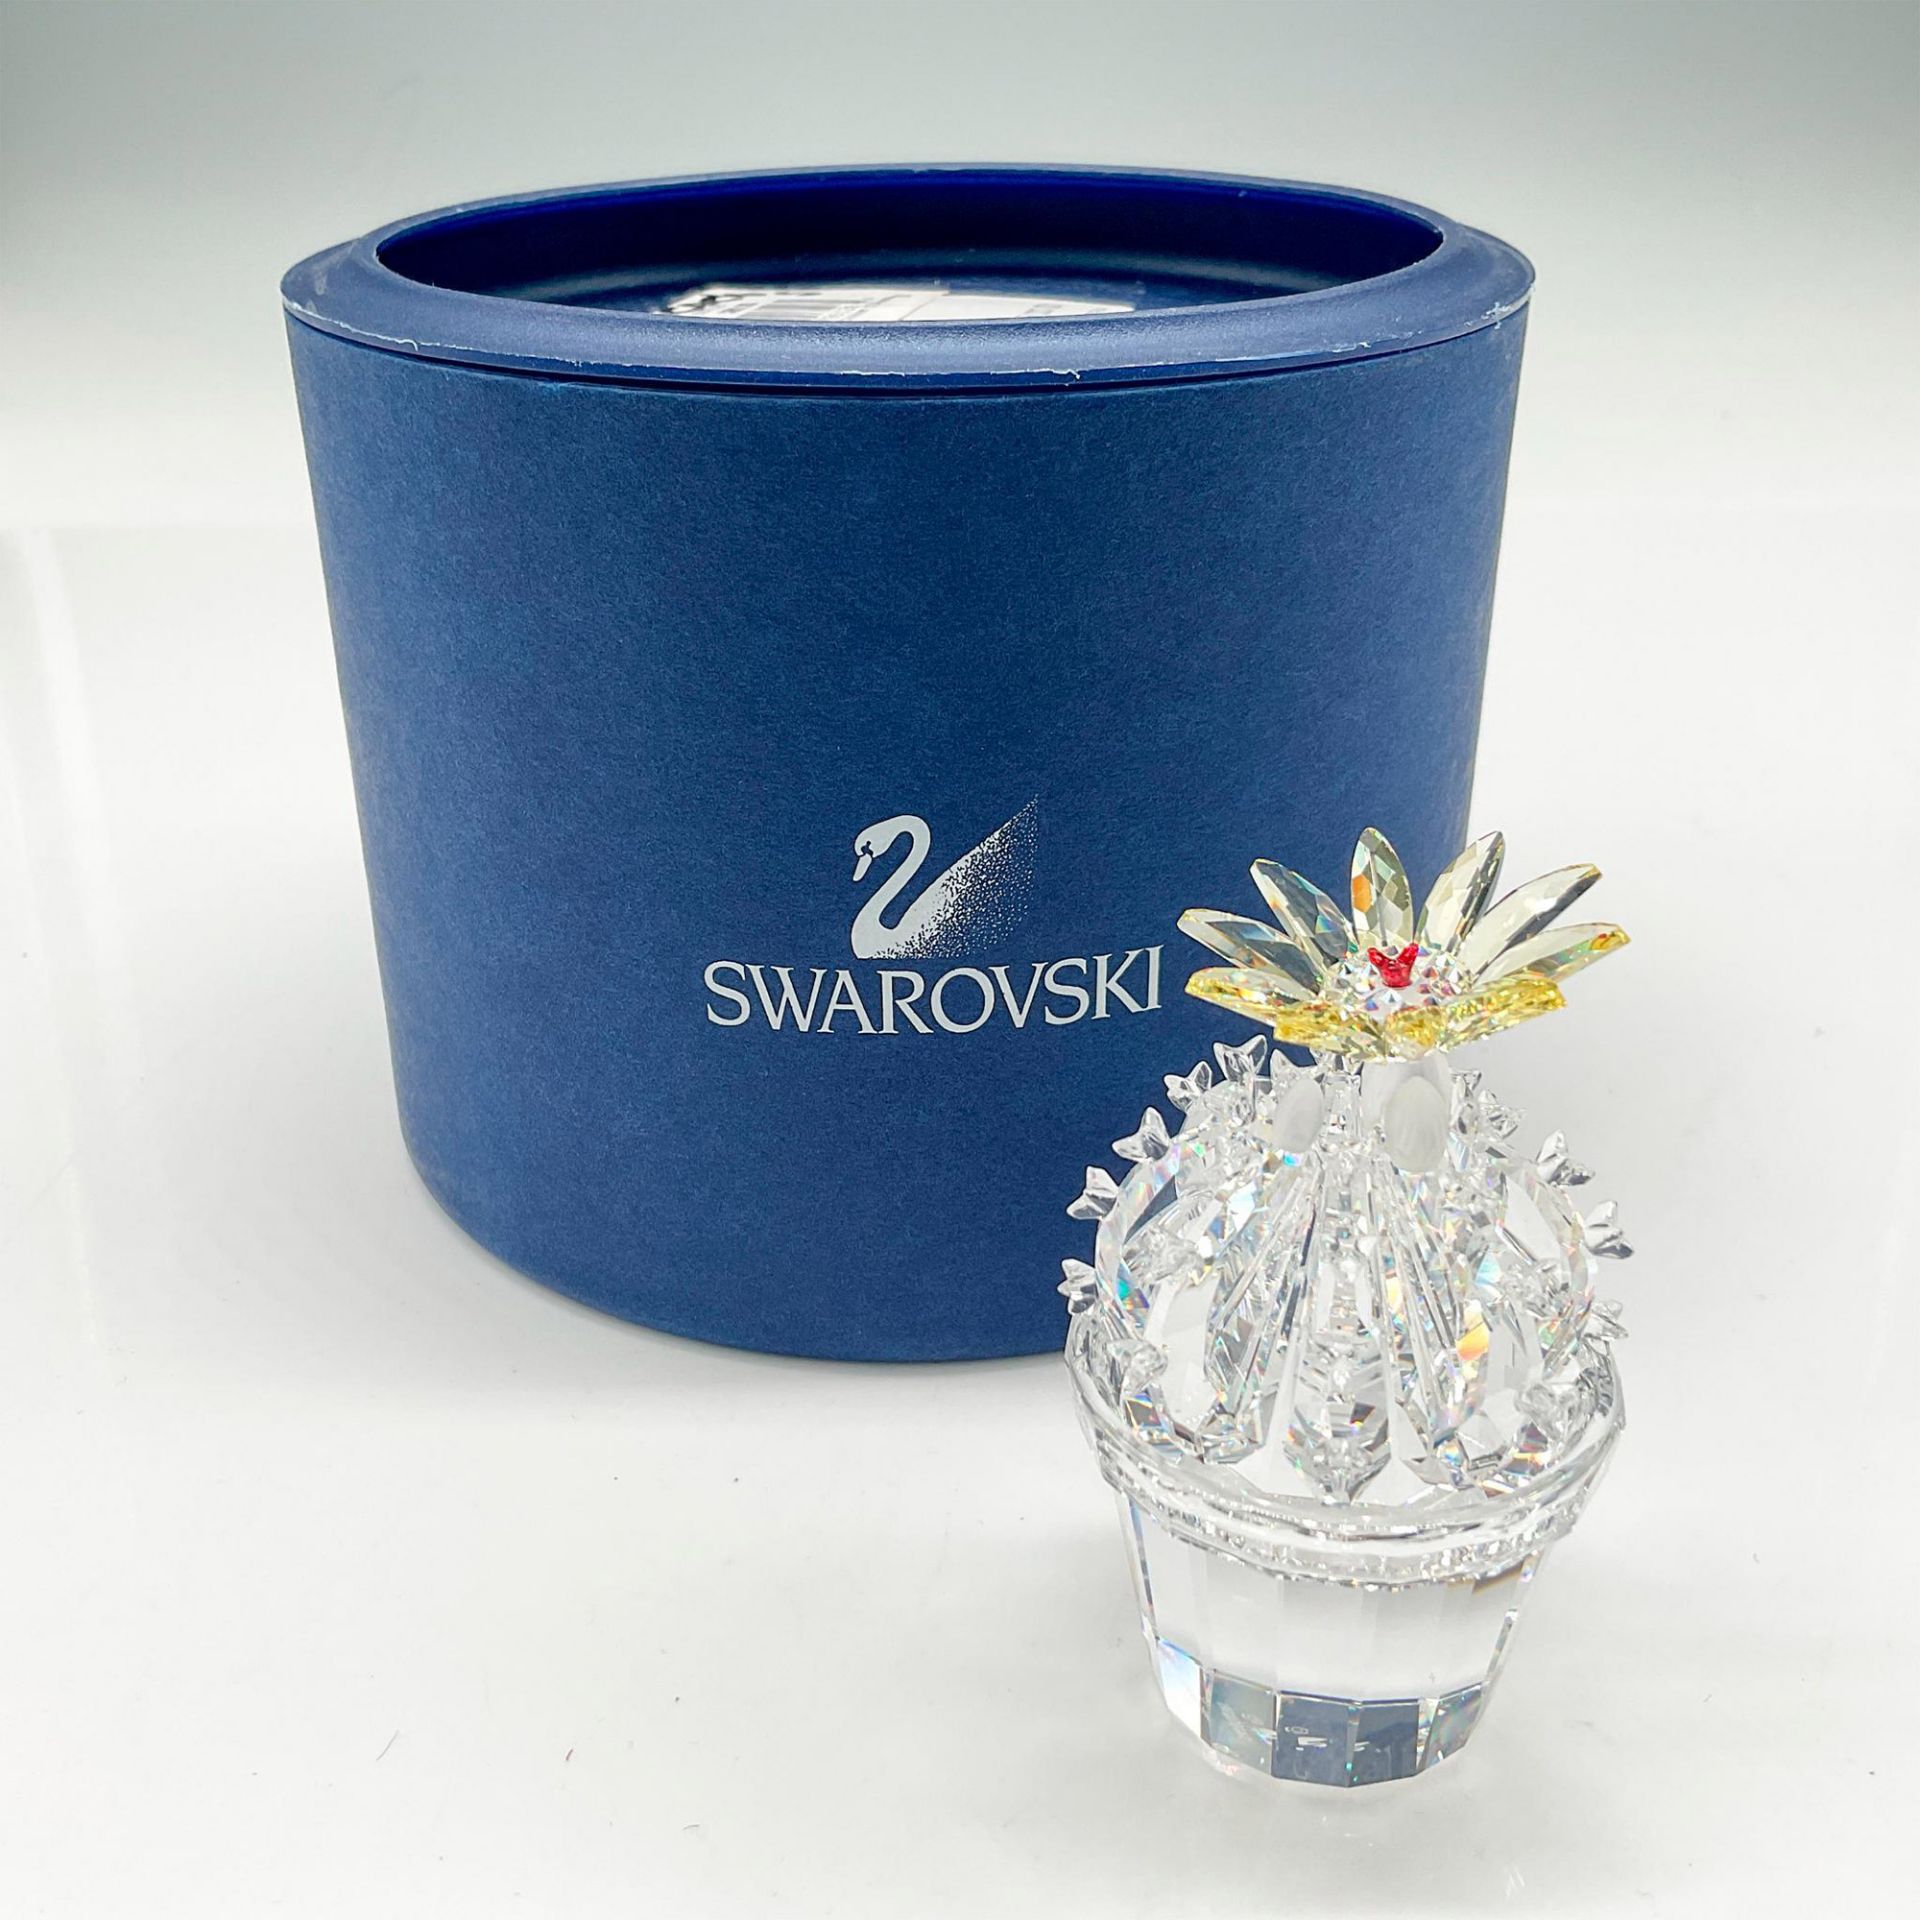 Swarovski Crystal Figurine, Flowering Cactus - Image 4 of 4